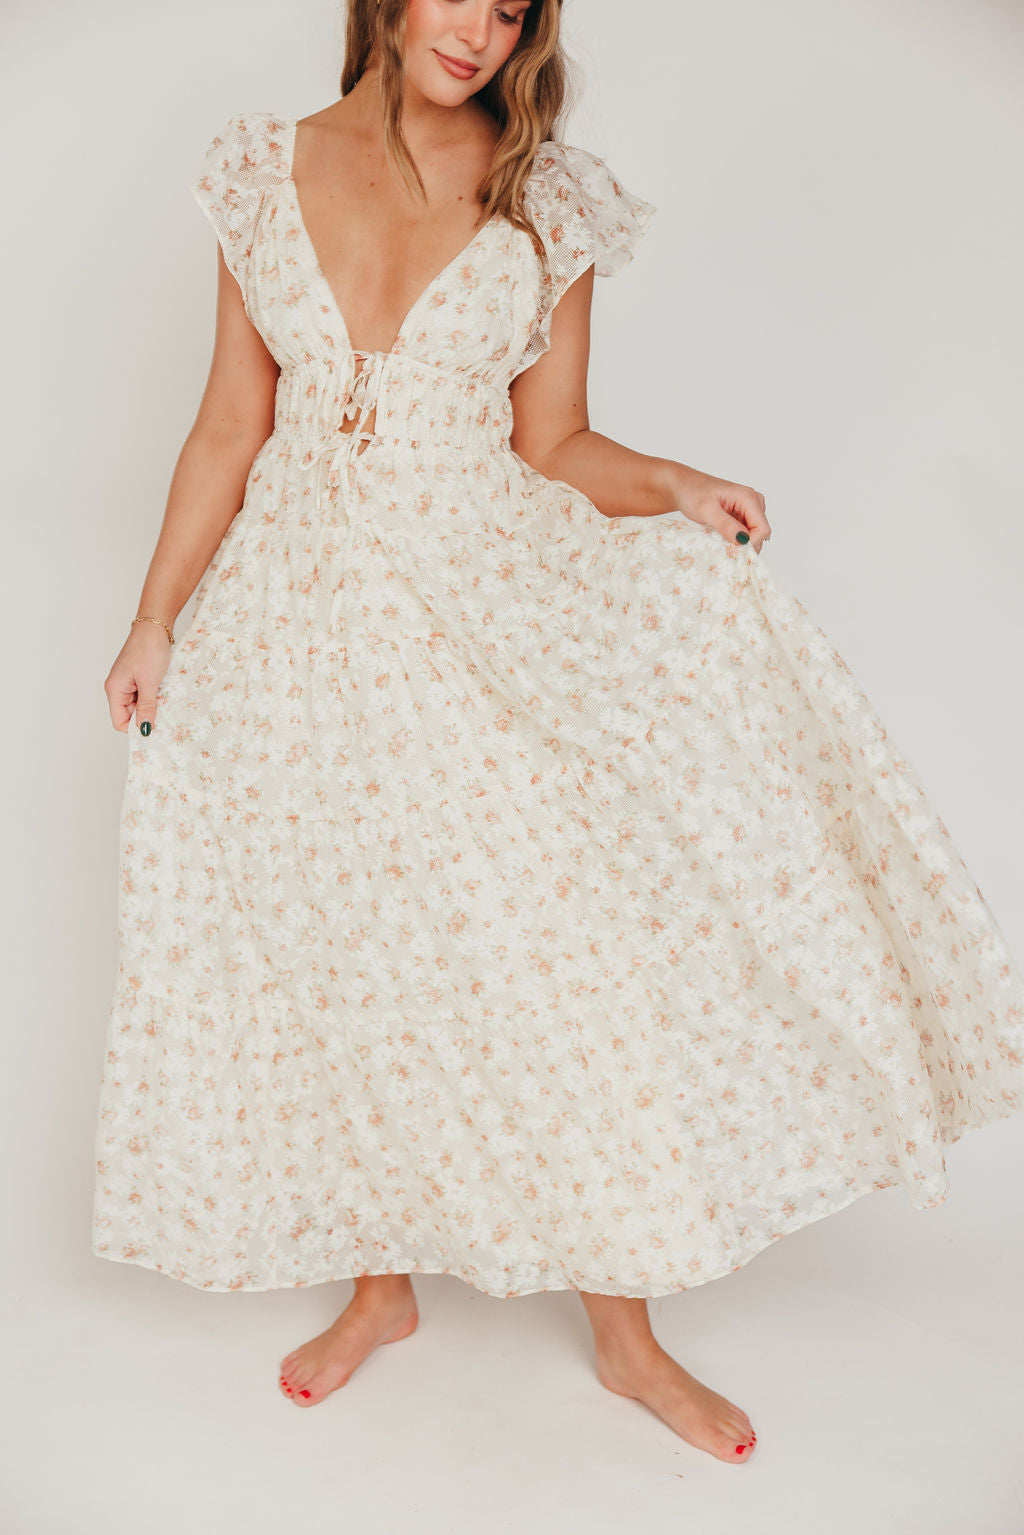 Enchanted Floral & Gingham Ruffled Maxi Dress in Cream/Peach